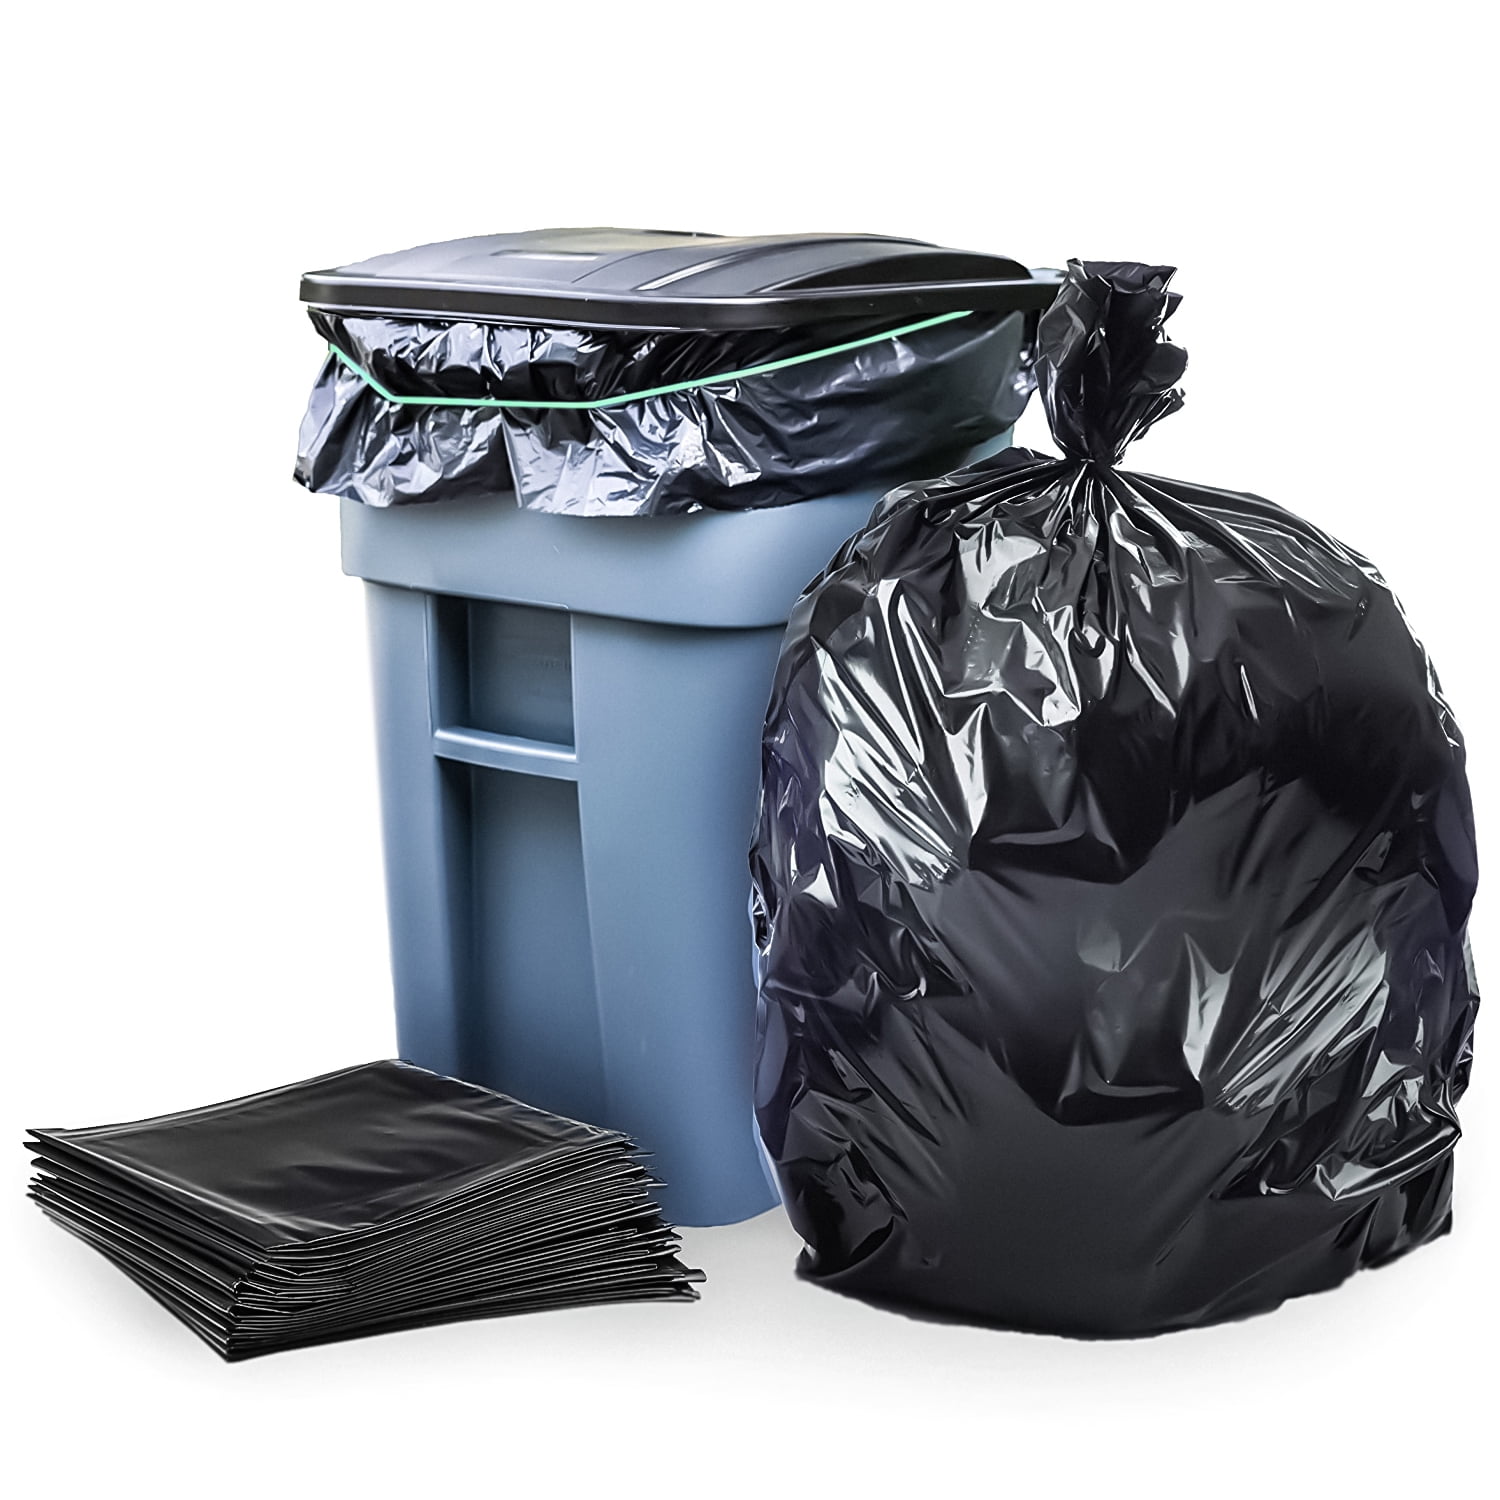 95-96 Gallon Trash Bags 50/Bags w/Ties, Wholesale Large Black Heavy Du –  vacpi